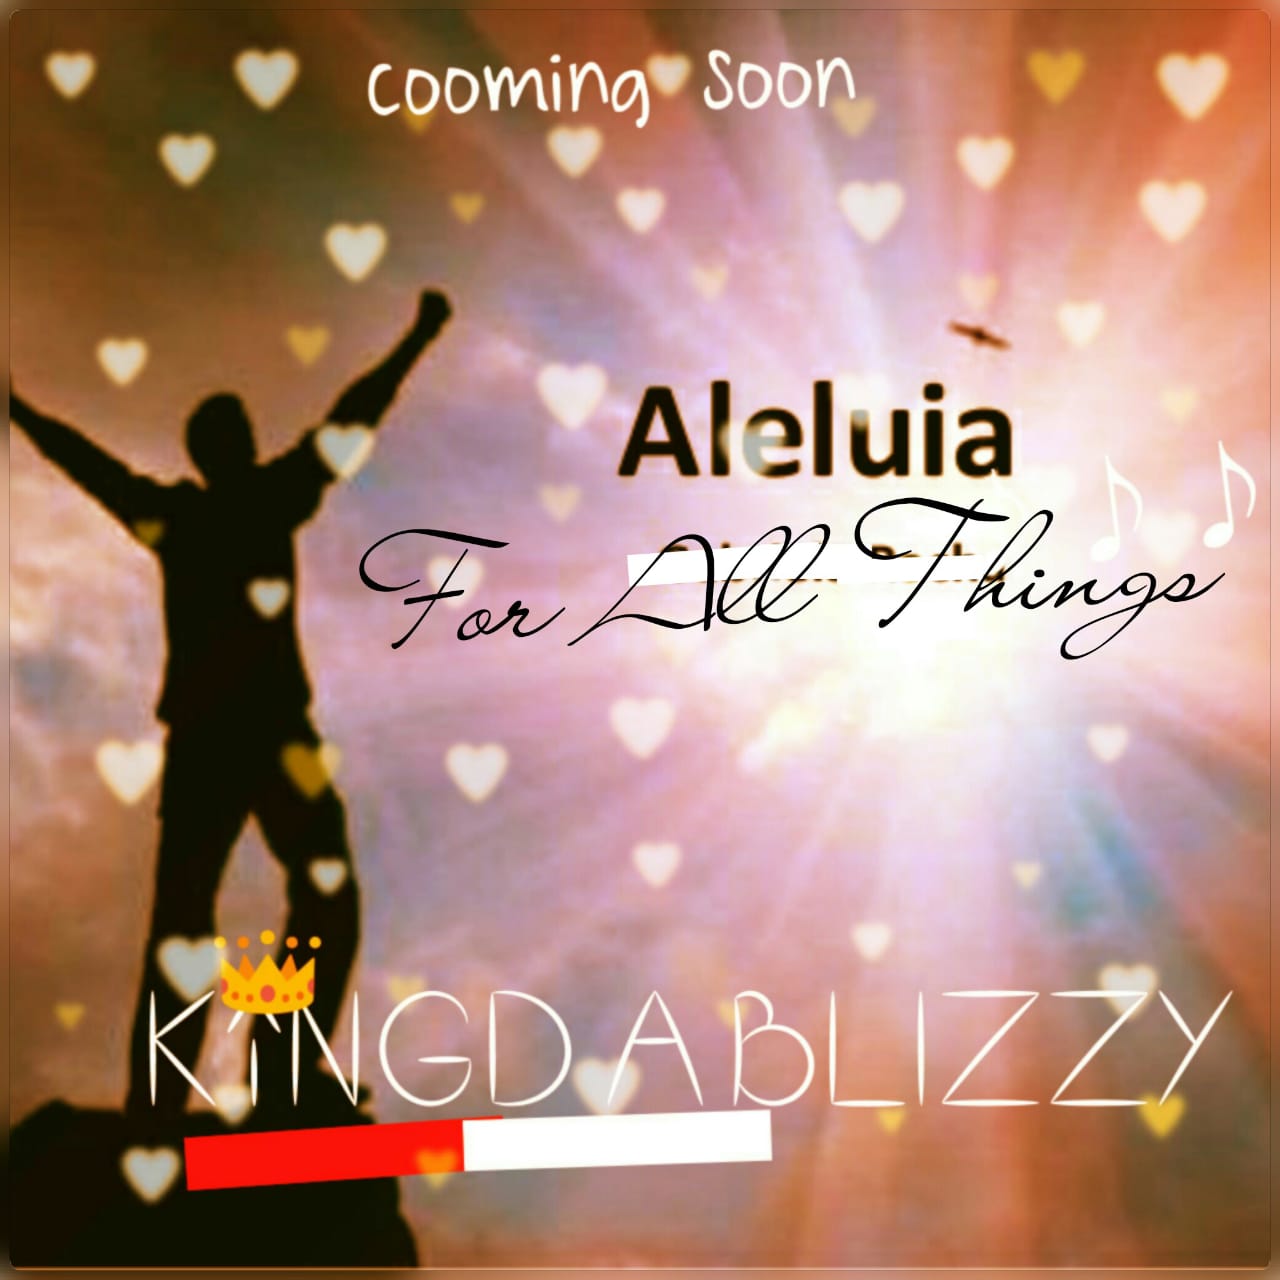 King Dablizzy - Aleluia (Rap) 2019  [Download] Mp3